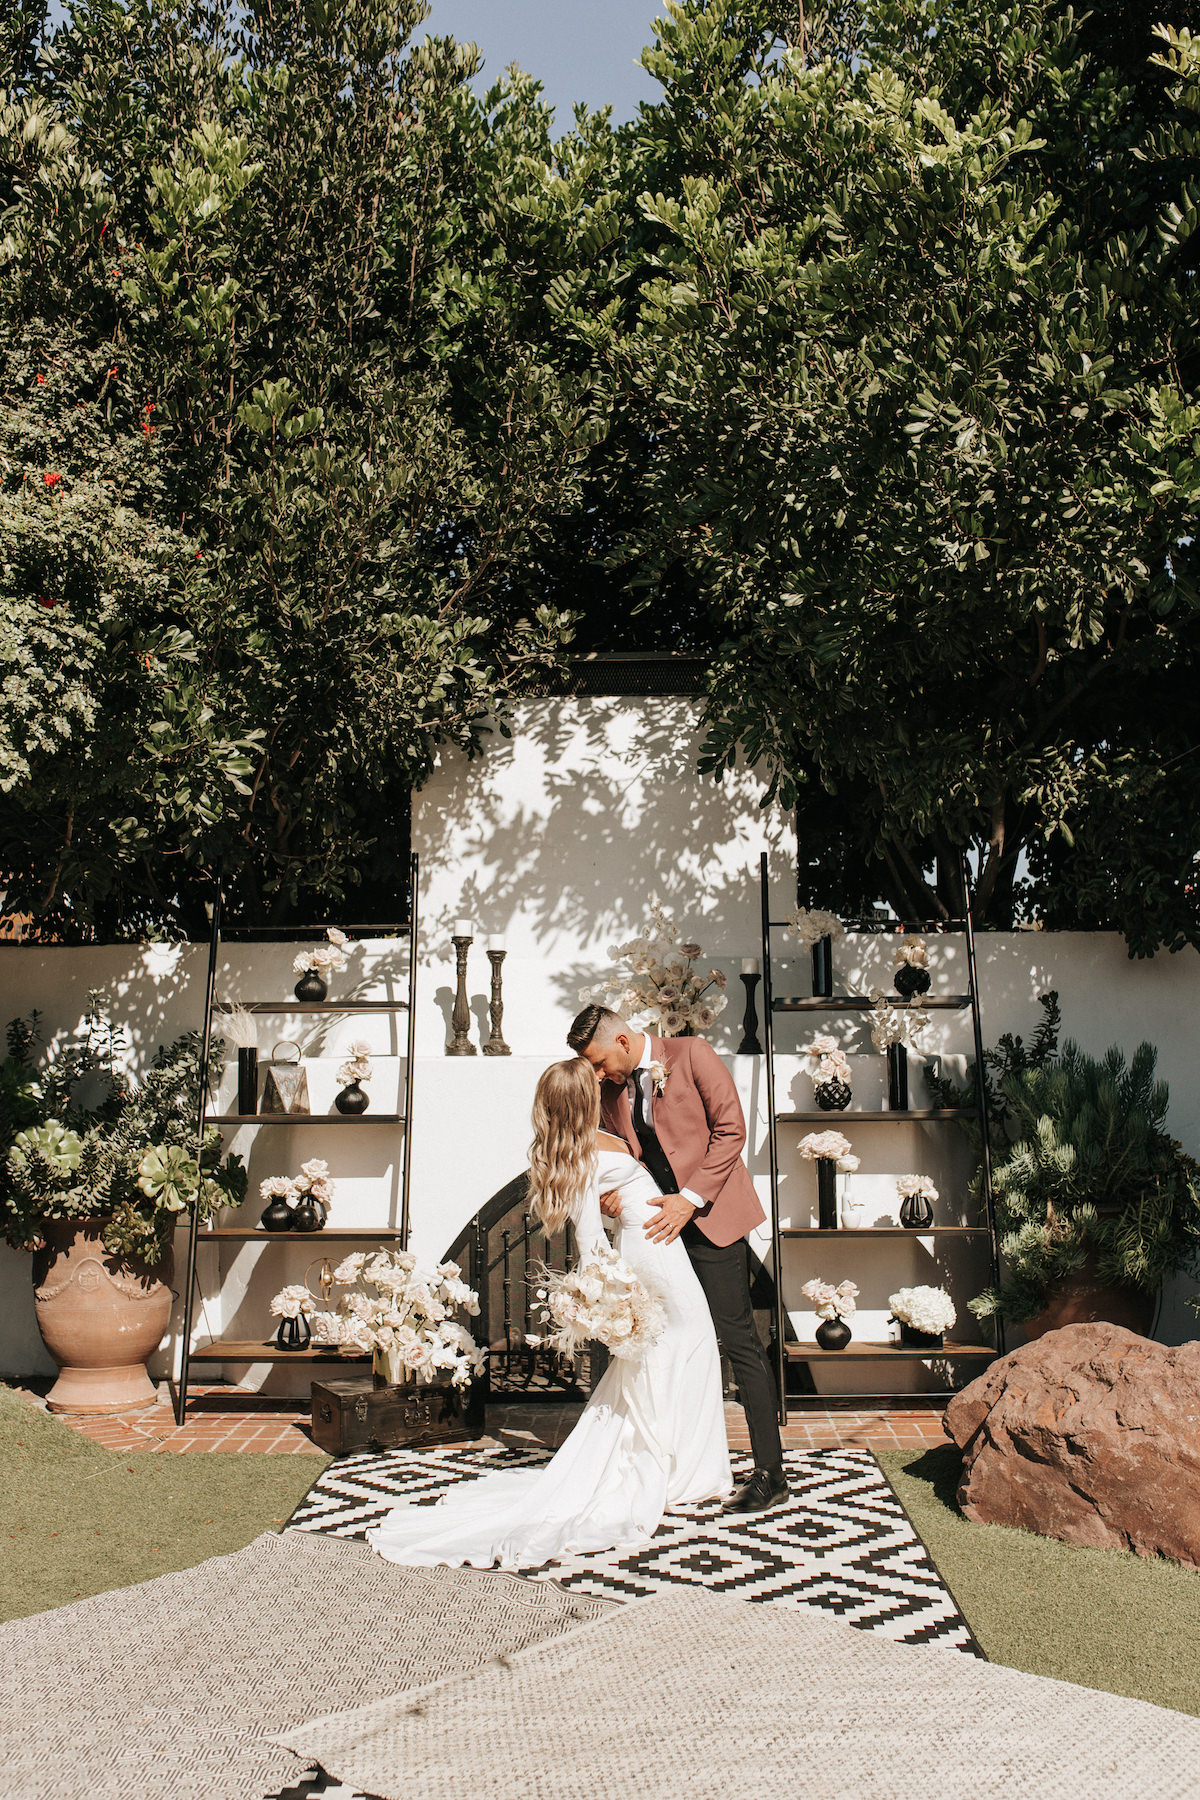 Boho outdoor wedding ceremony - Sydney Bliss Photography